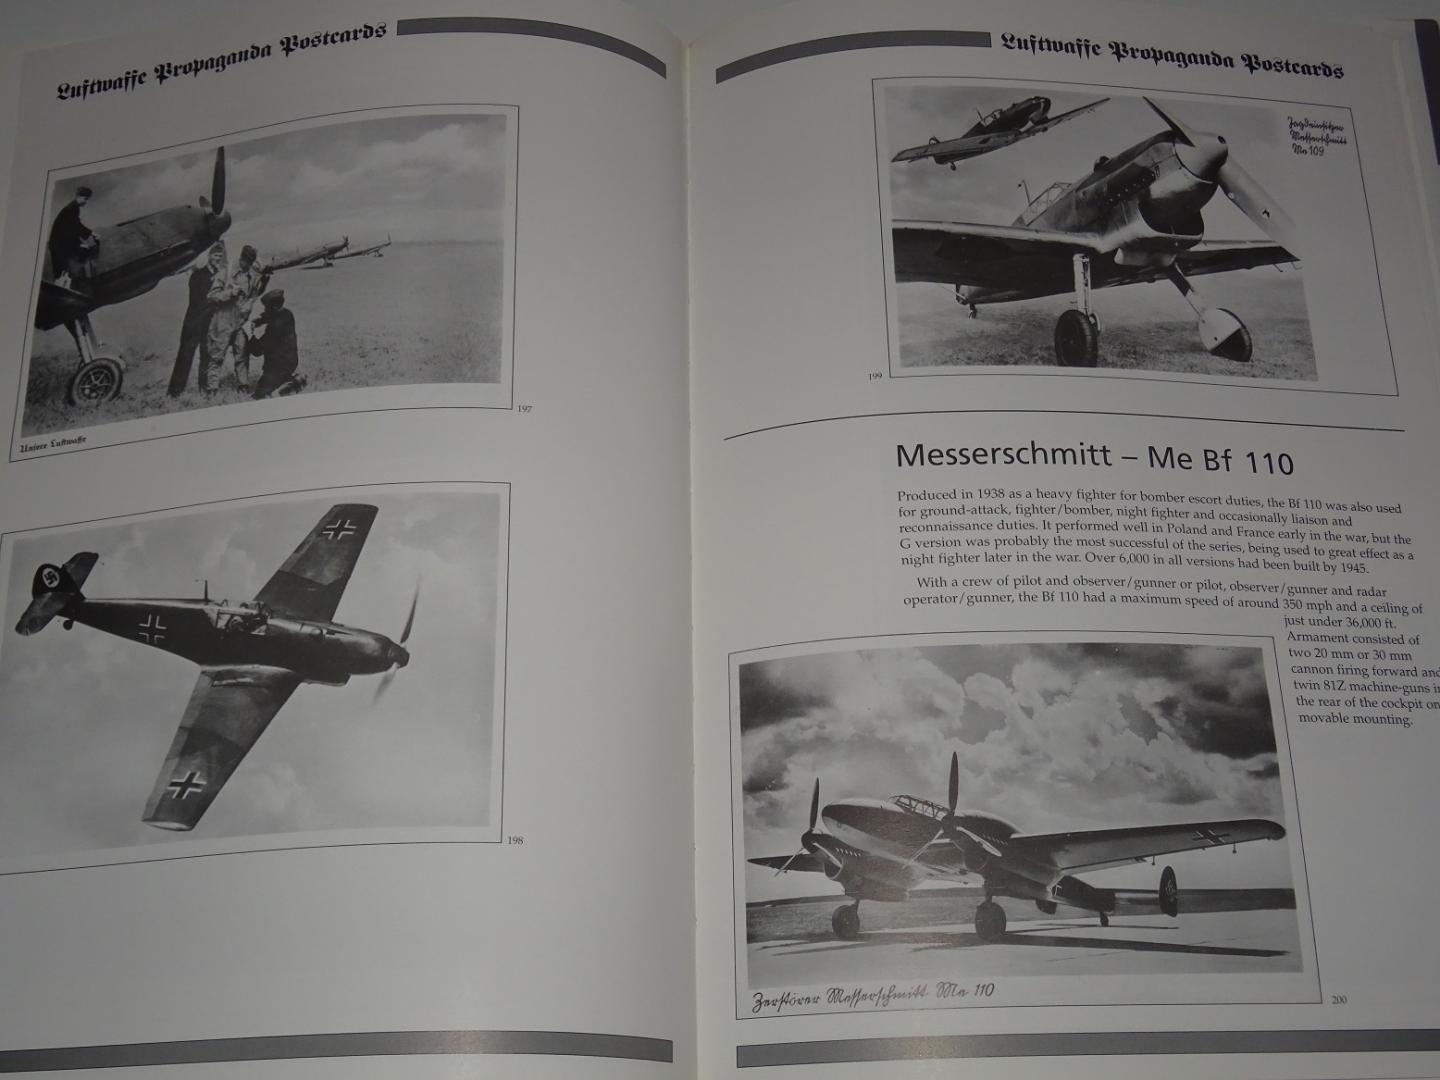 Wilson, James - Luftwaffe Propaganda Postcards : Pictorial History in Original German Postcards